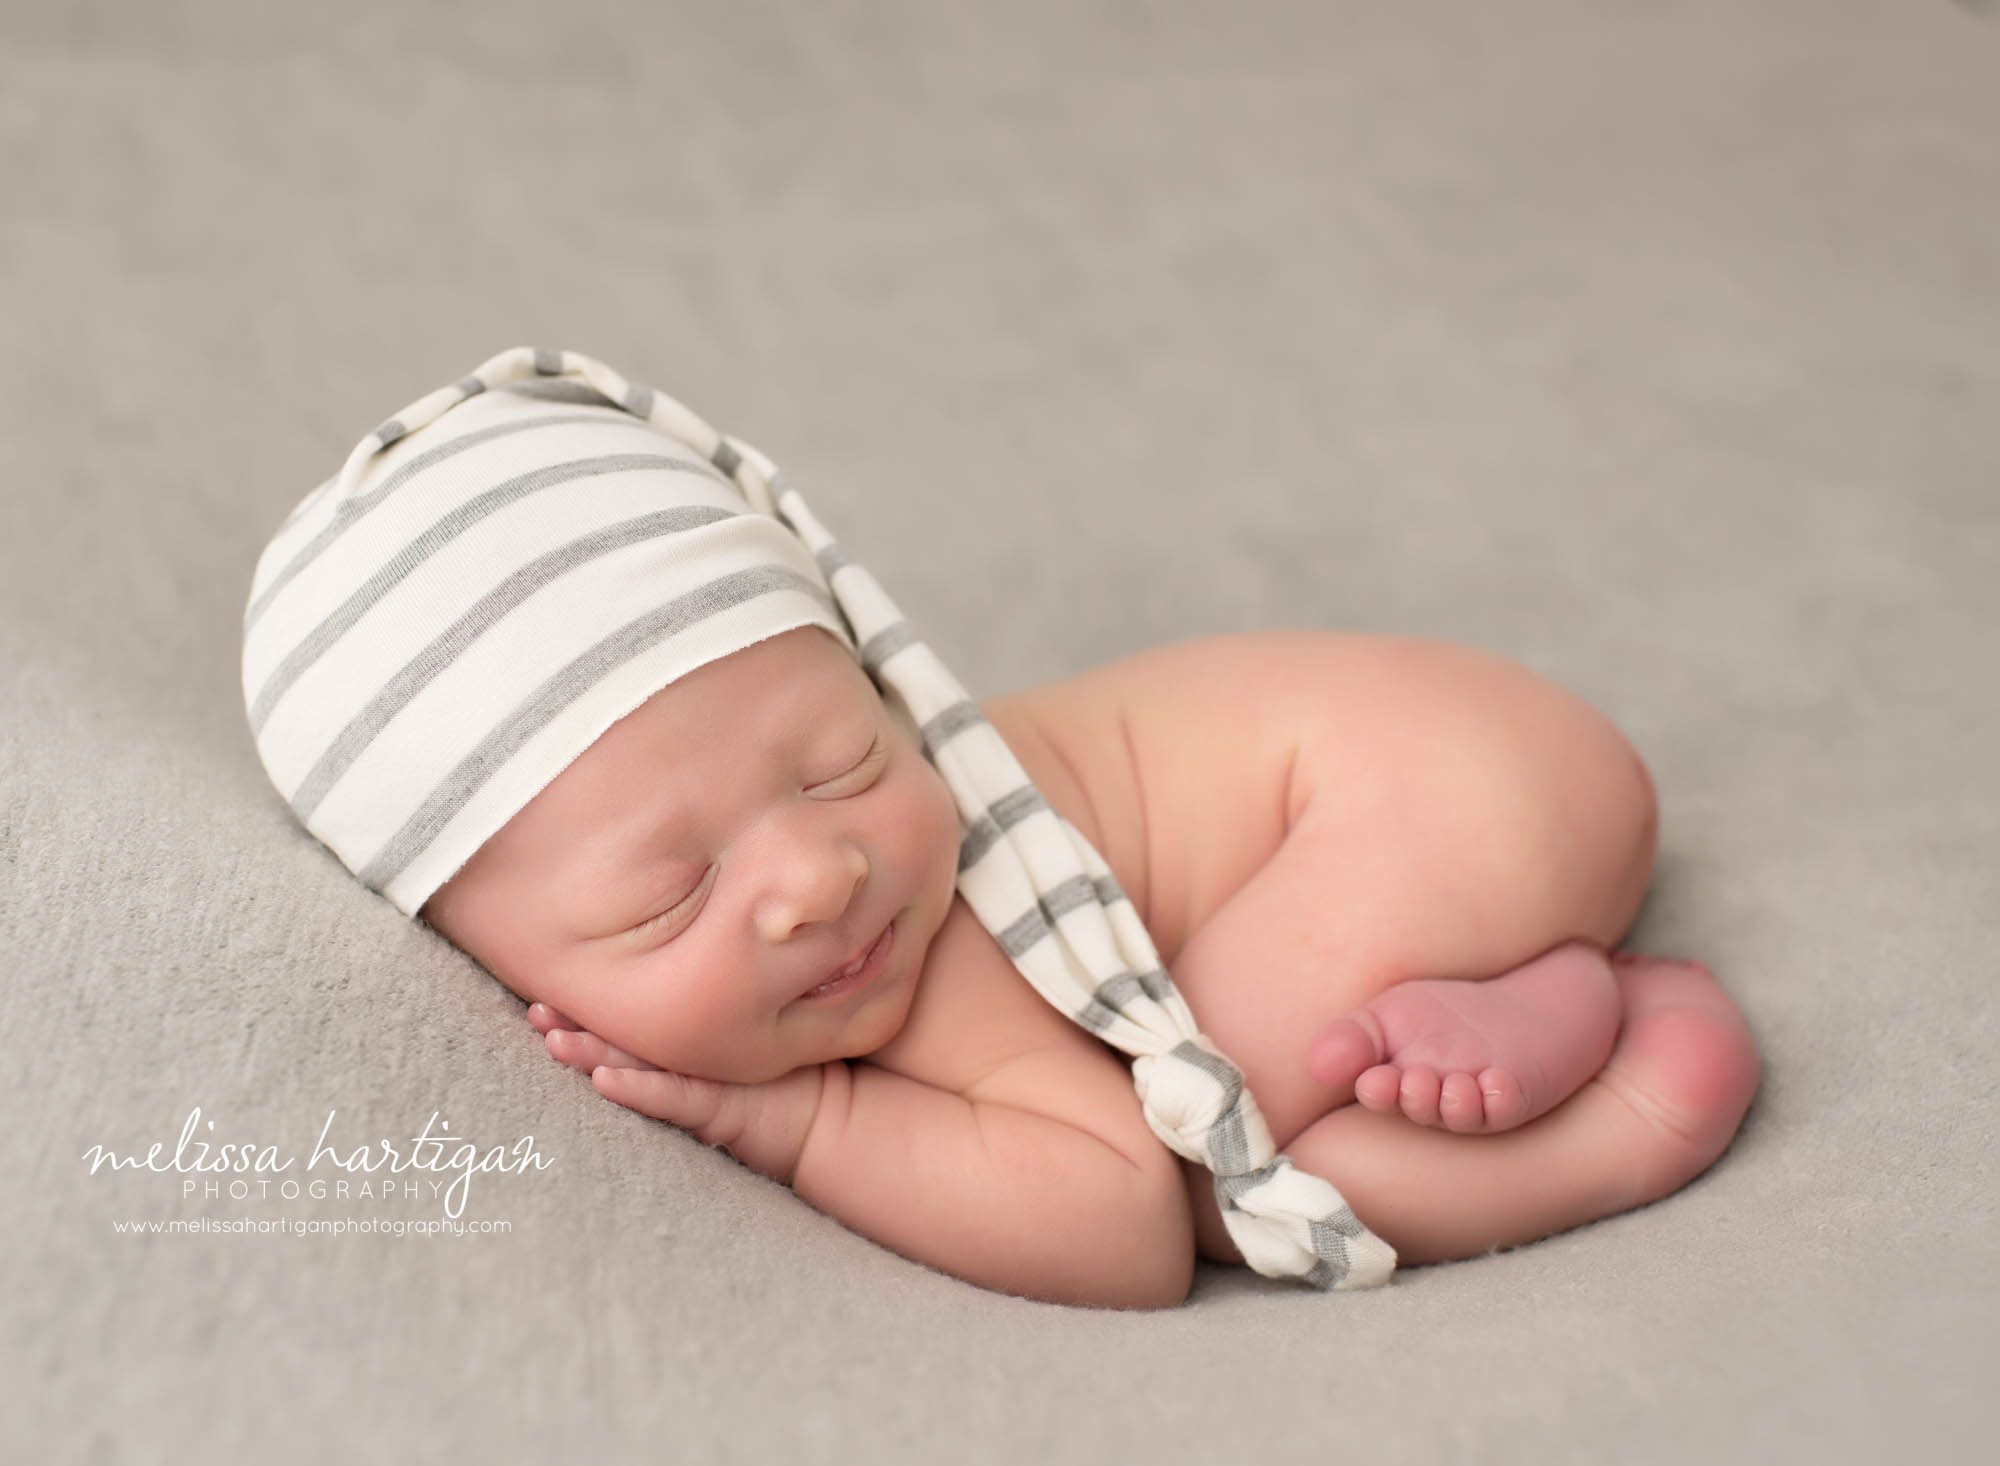 newborn baby boy posed on tummy wearing cream and gray striped long sleepy cap middletown newborn photography